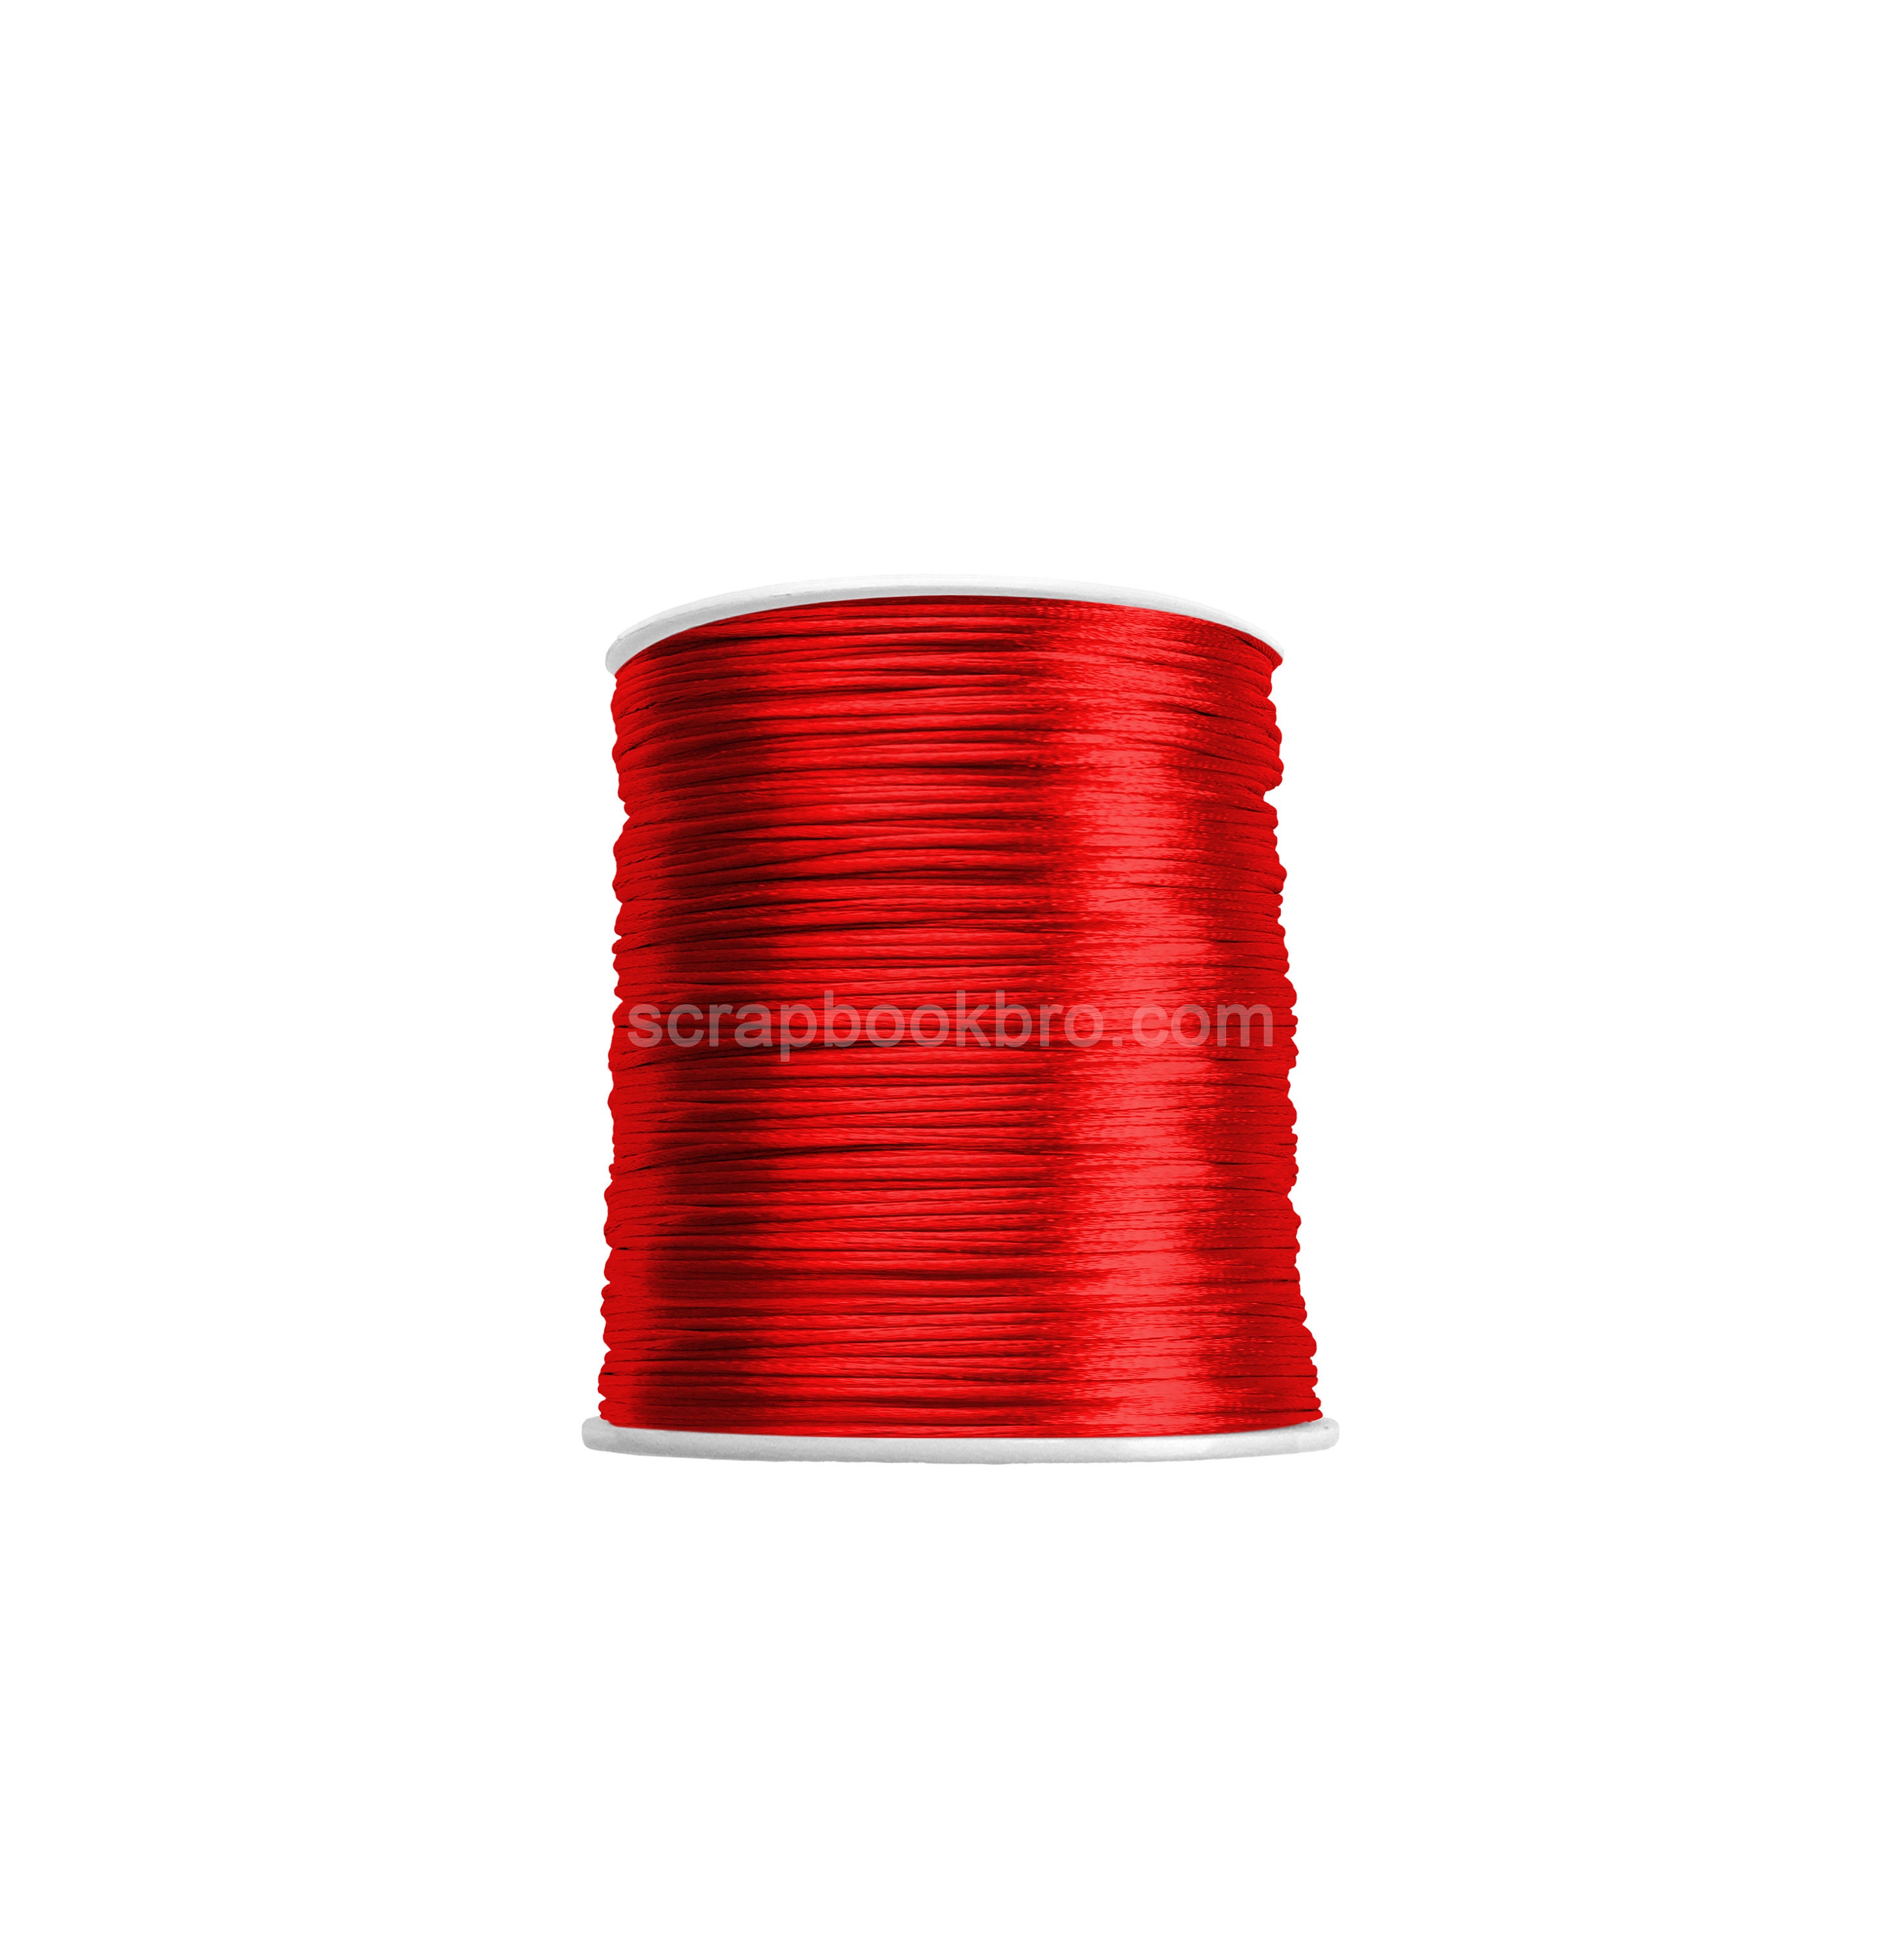 Red 1mm Satin Nylon Cord